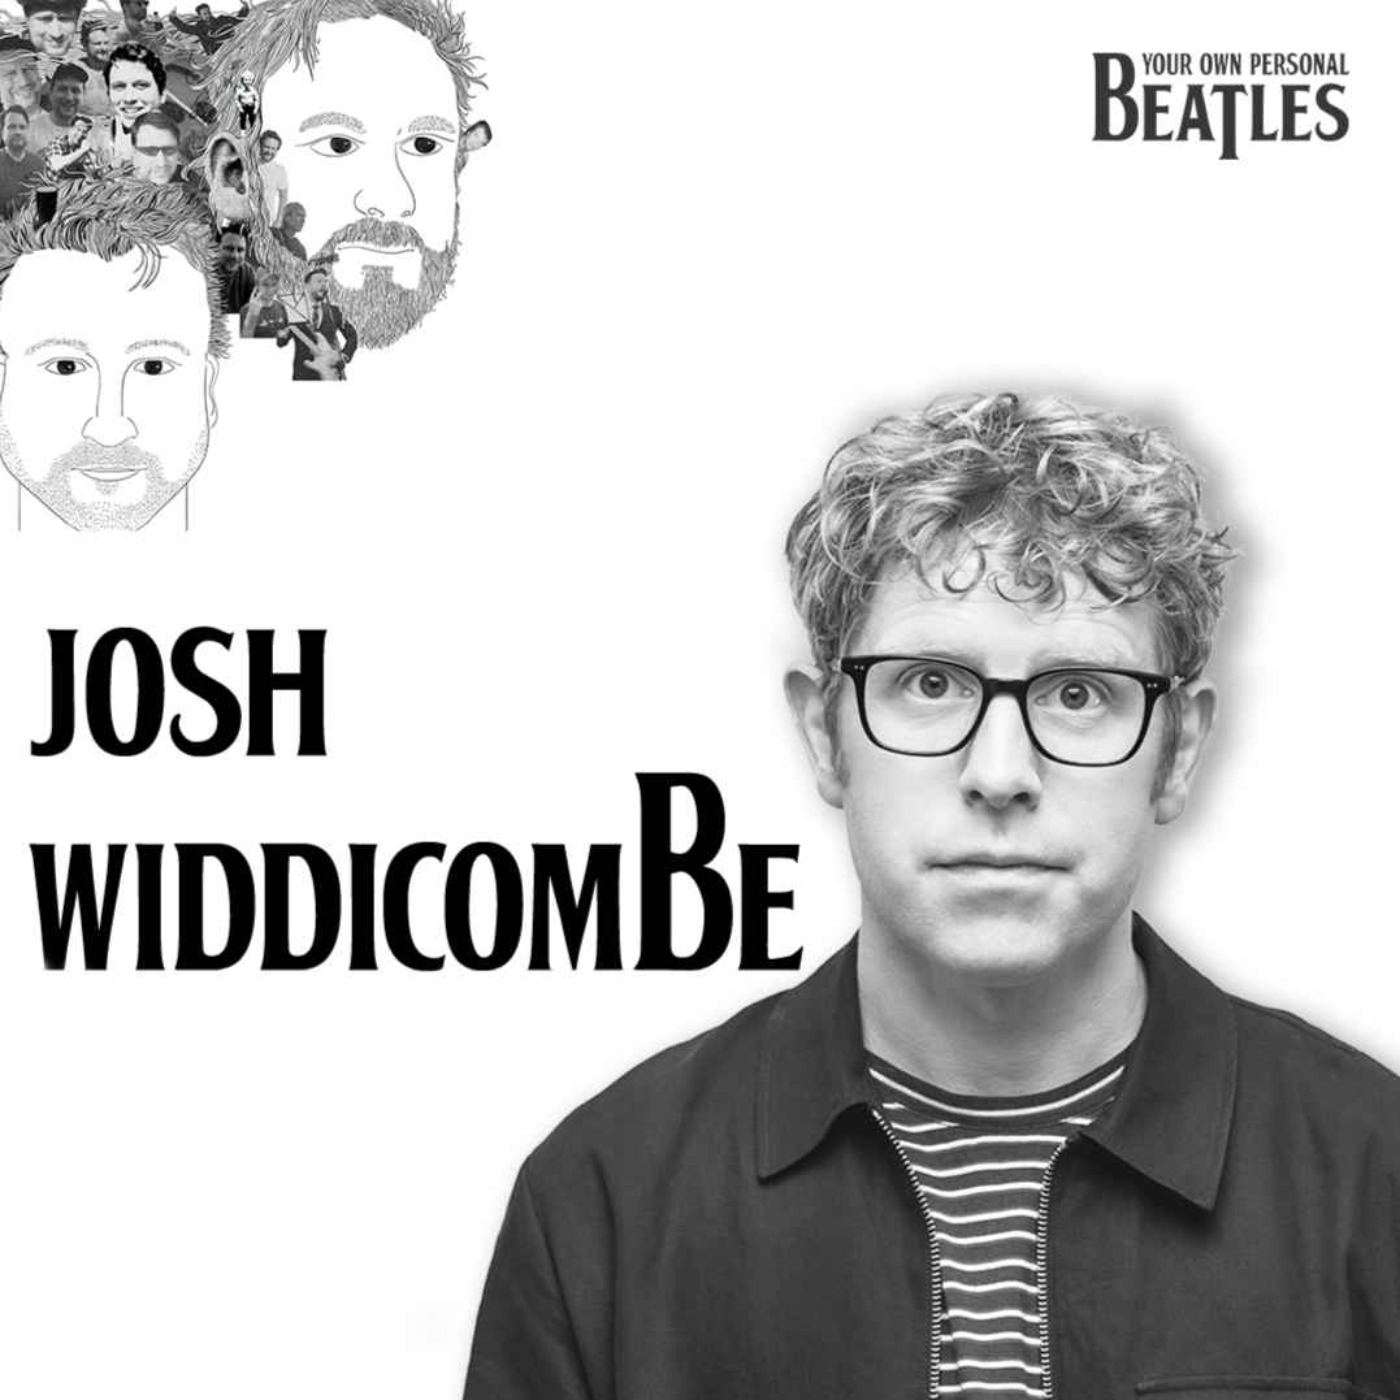 Josh Widdicombe's Personal Beatles